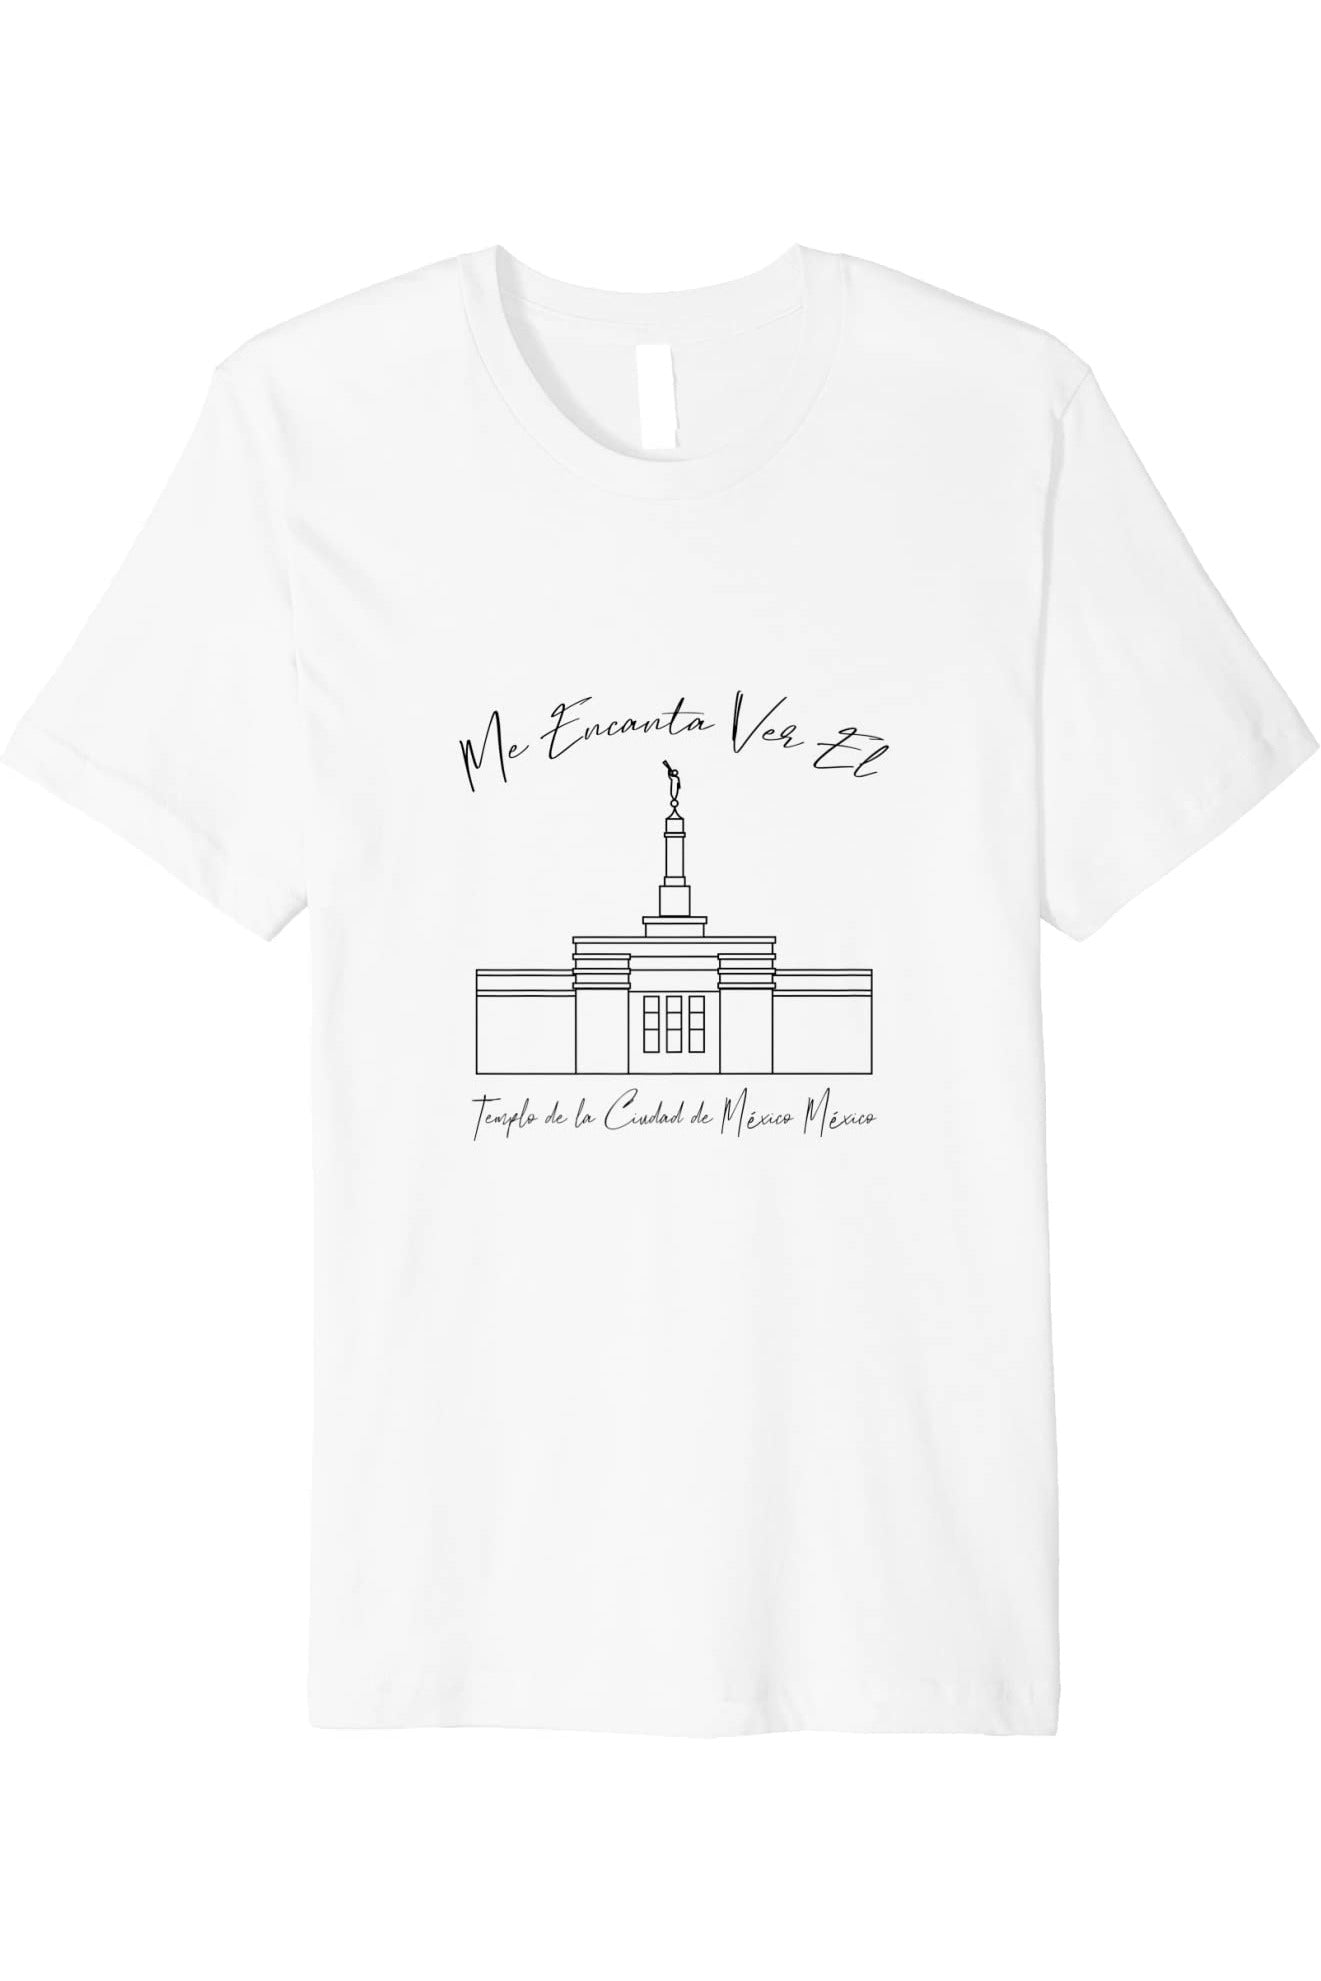 Ciudad Juarez Mexico Temple T-Shirt - Premium - Calligraphy Style (Spanish) US